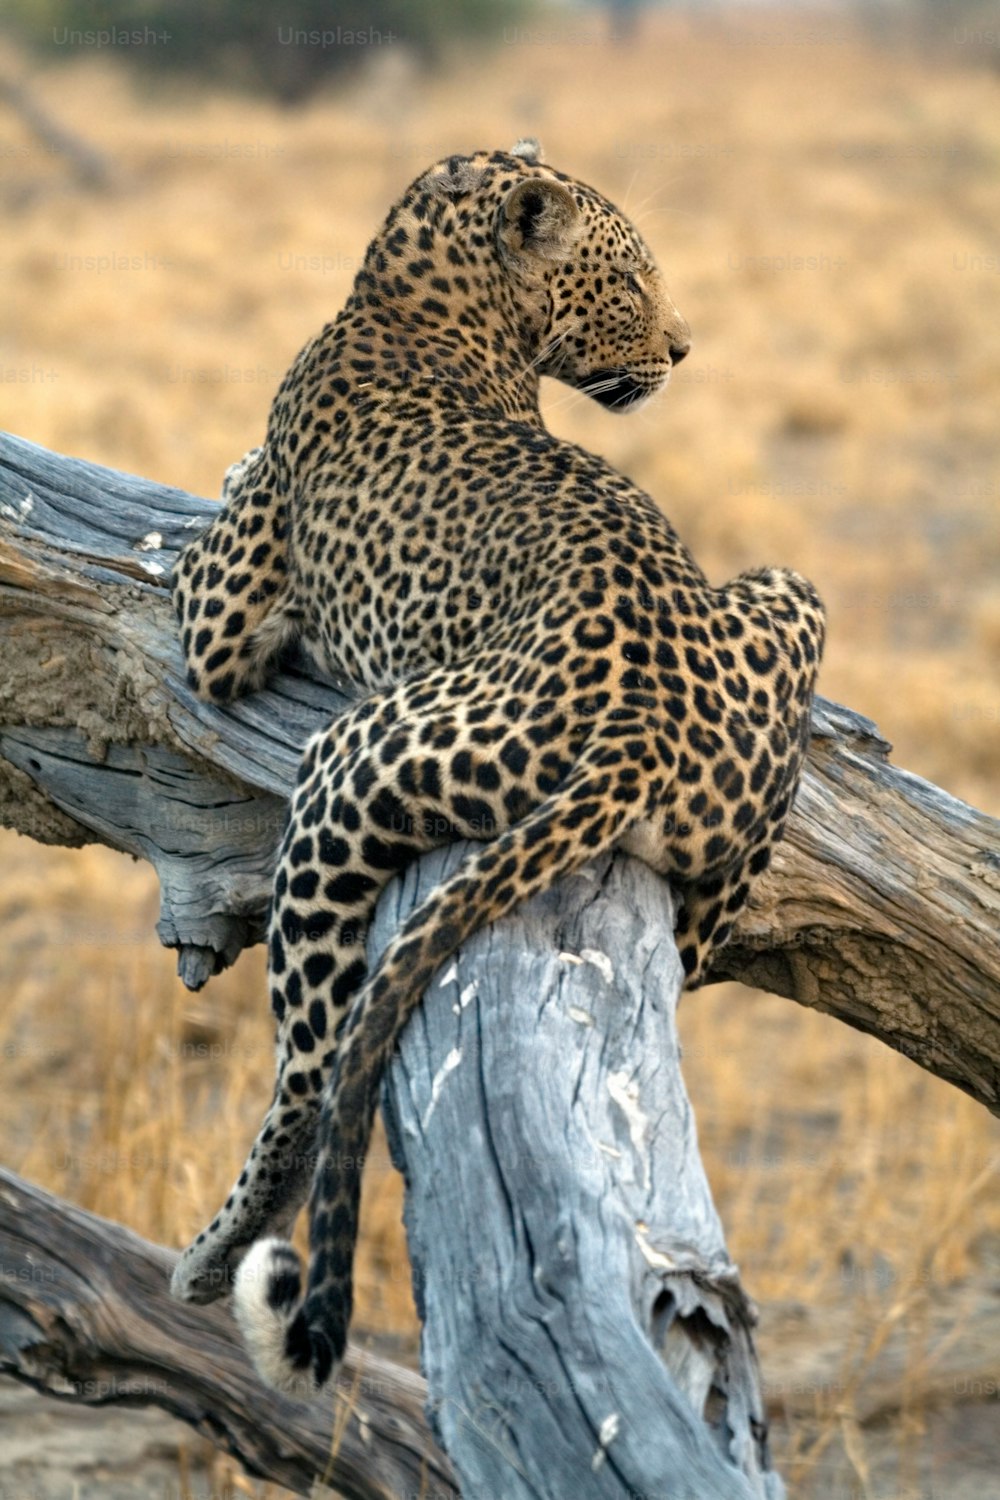 Leopardo descansando